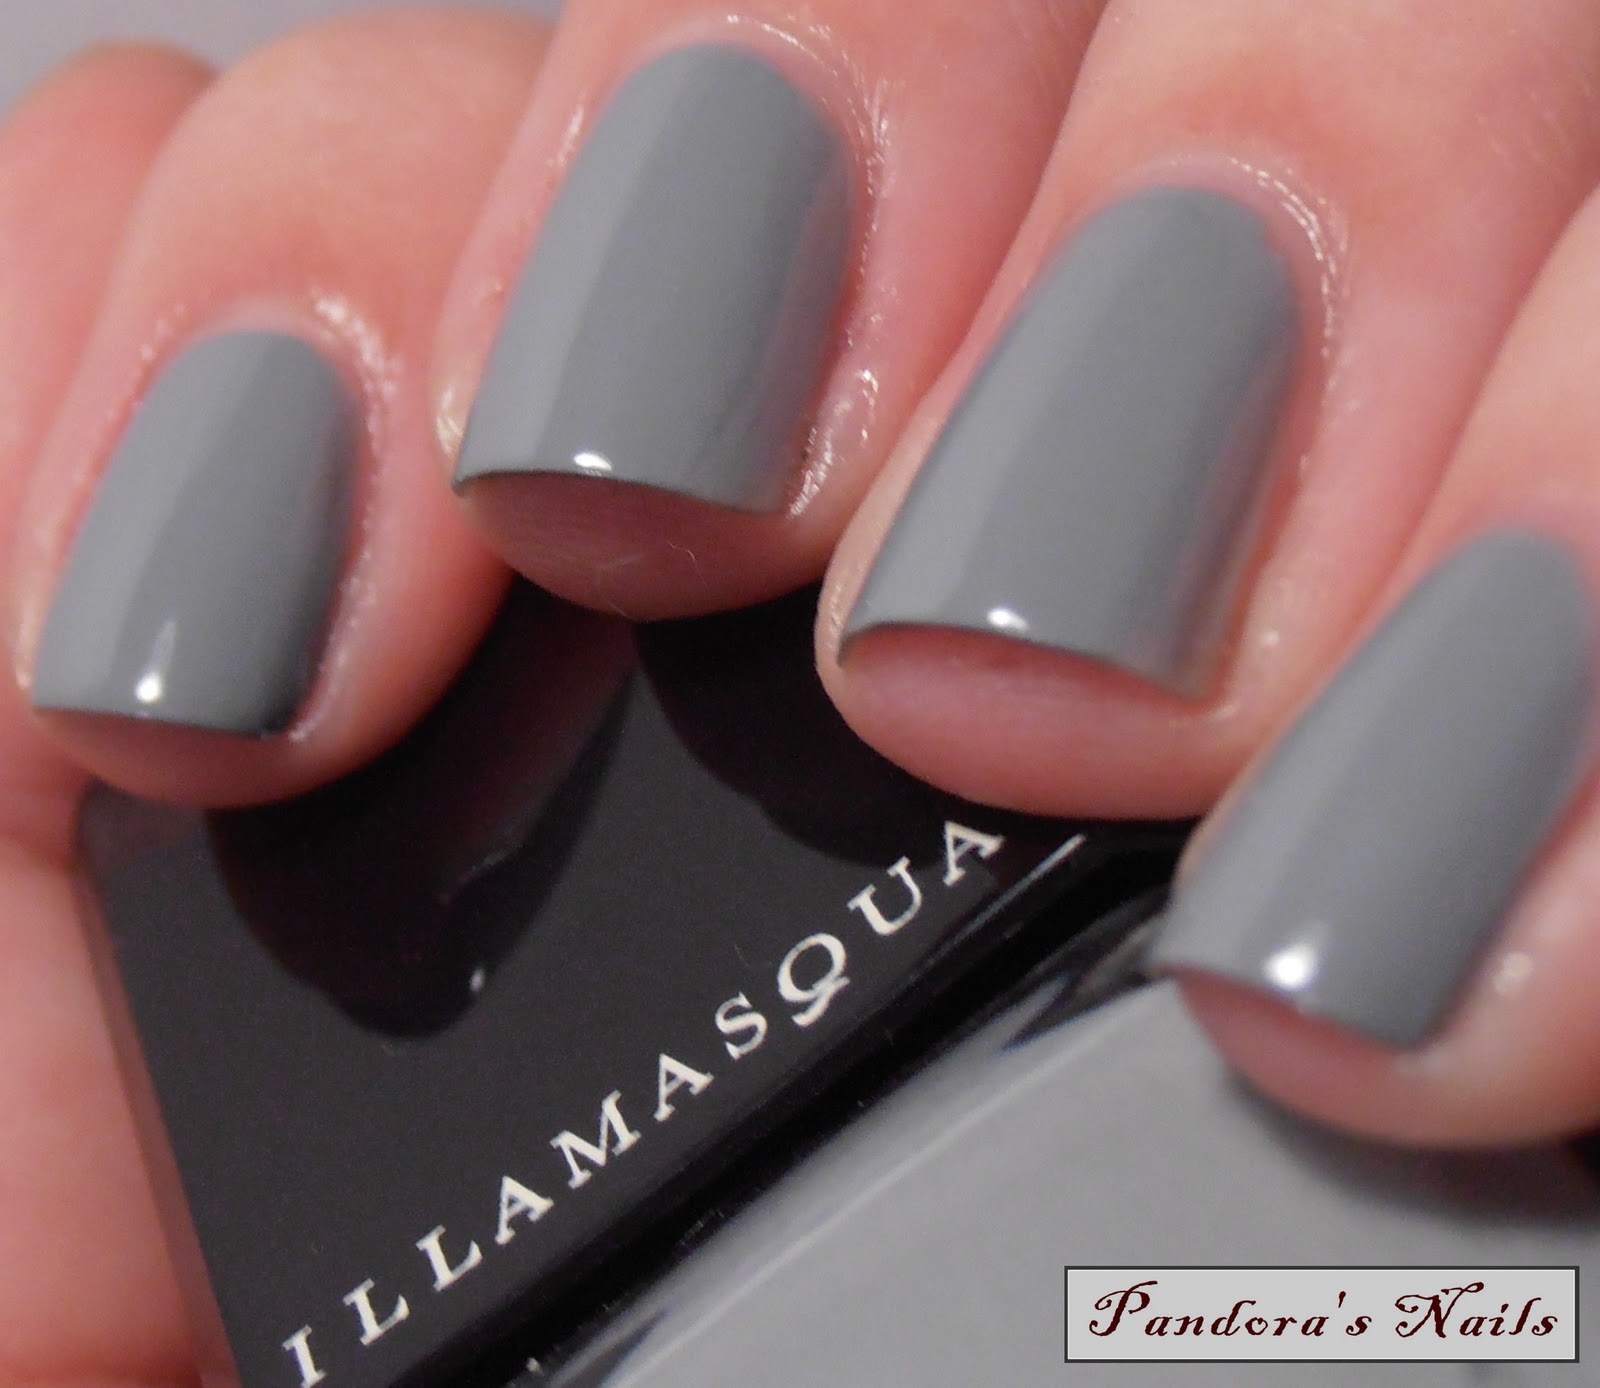 Pandora's Nails: Illamasqua DWS and Illamasqua Raindrops